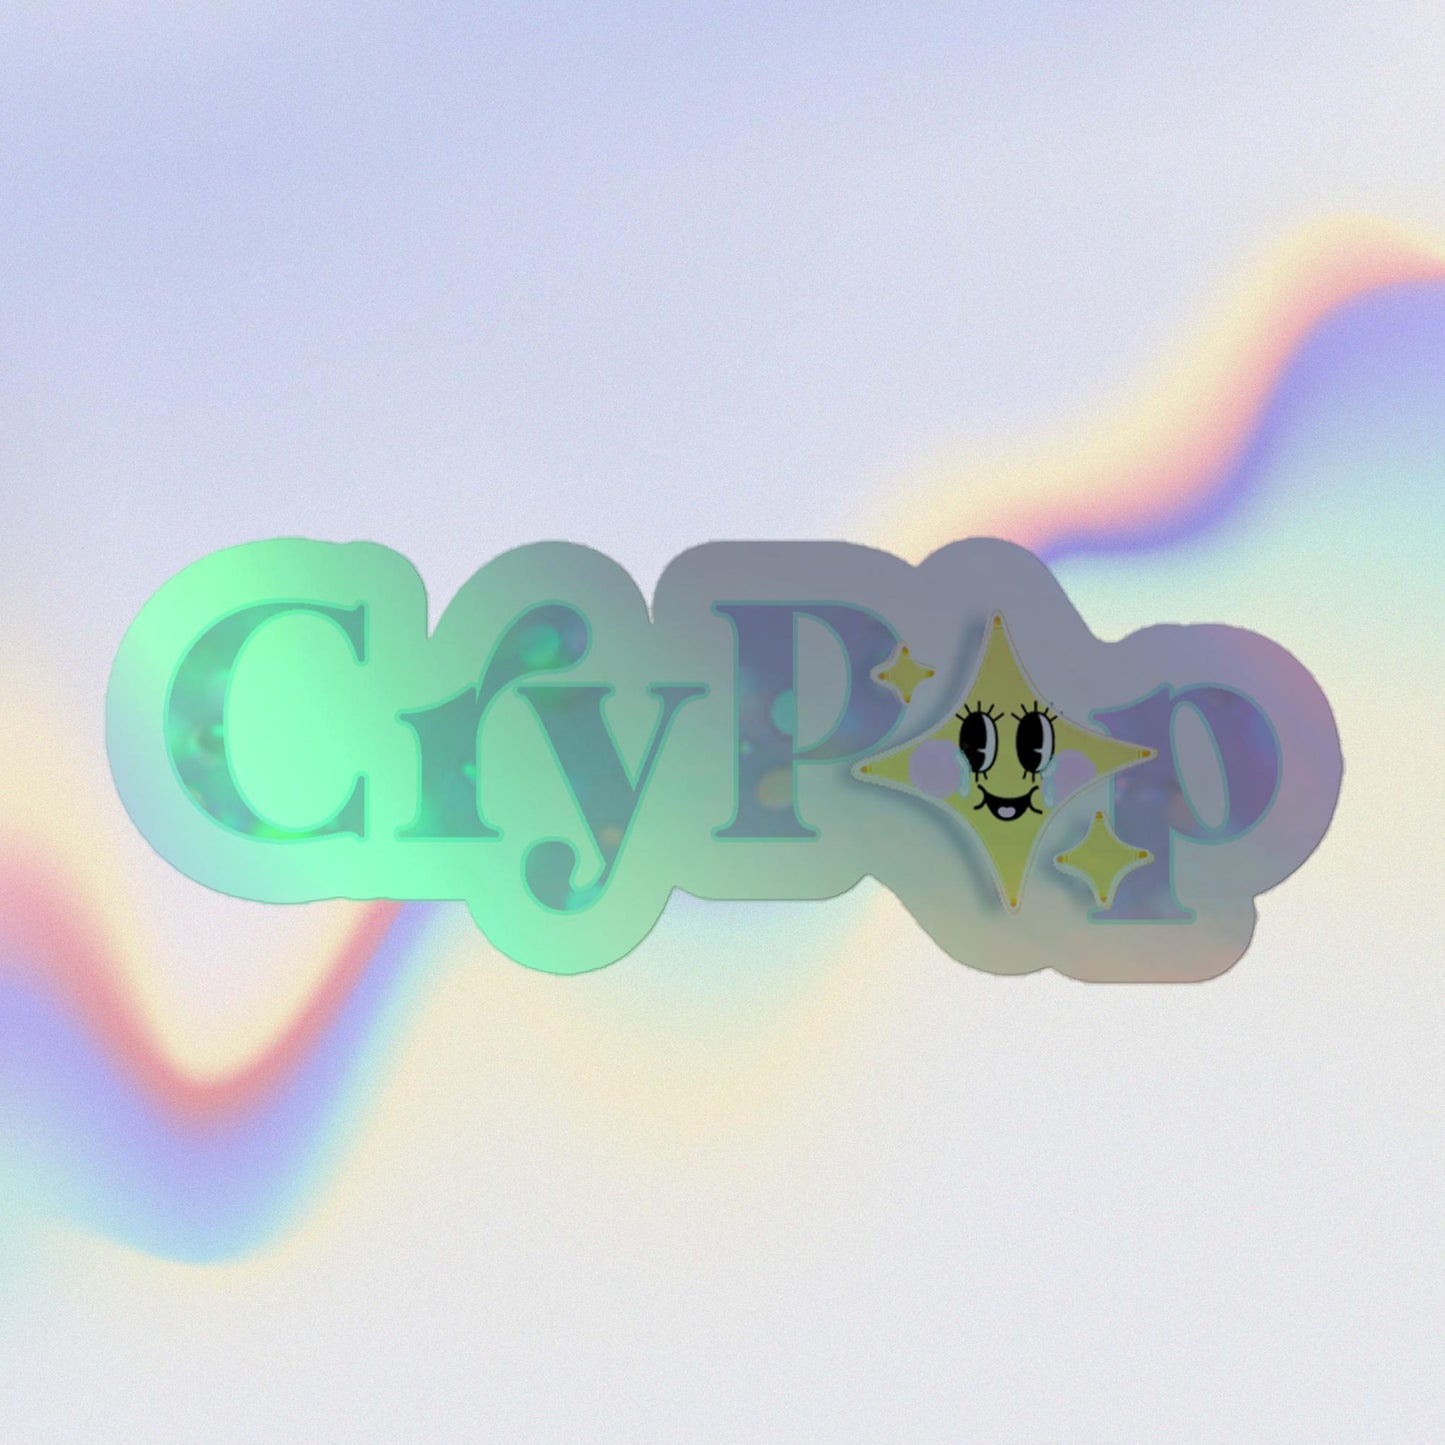 Cry Pop ✨ logo Holographic sticker